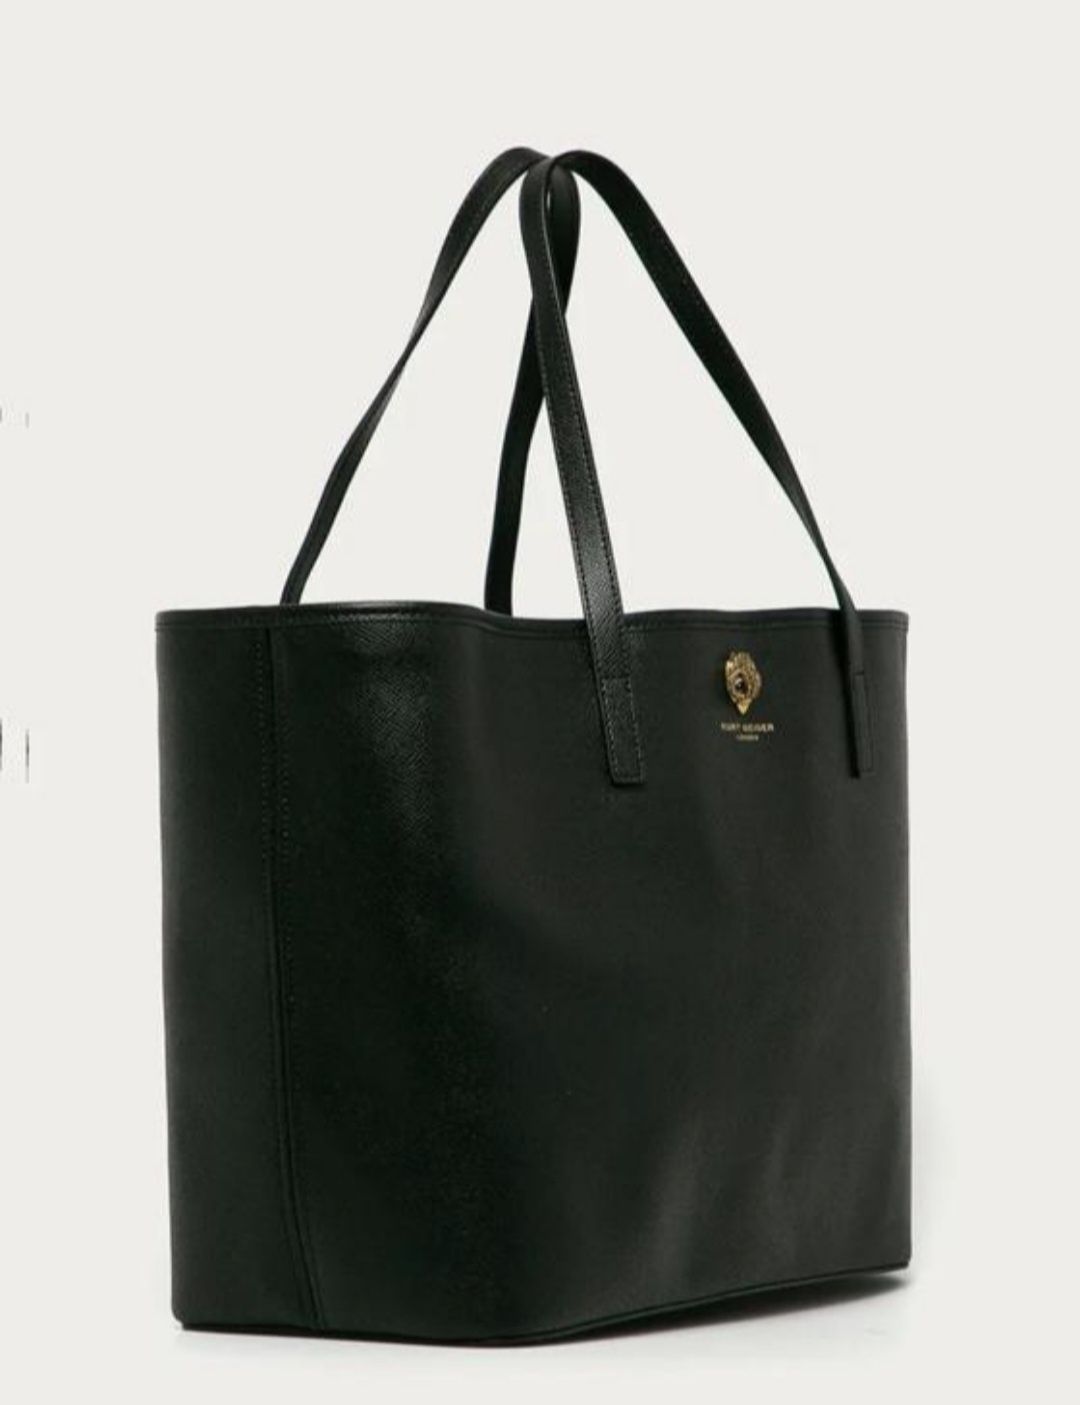 Сумка шопер Kurt Geiger оригинал шкіряна чорна сумка курт гейгер сумка